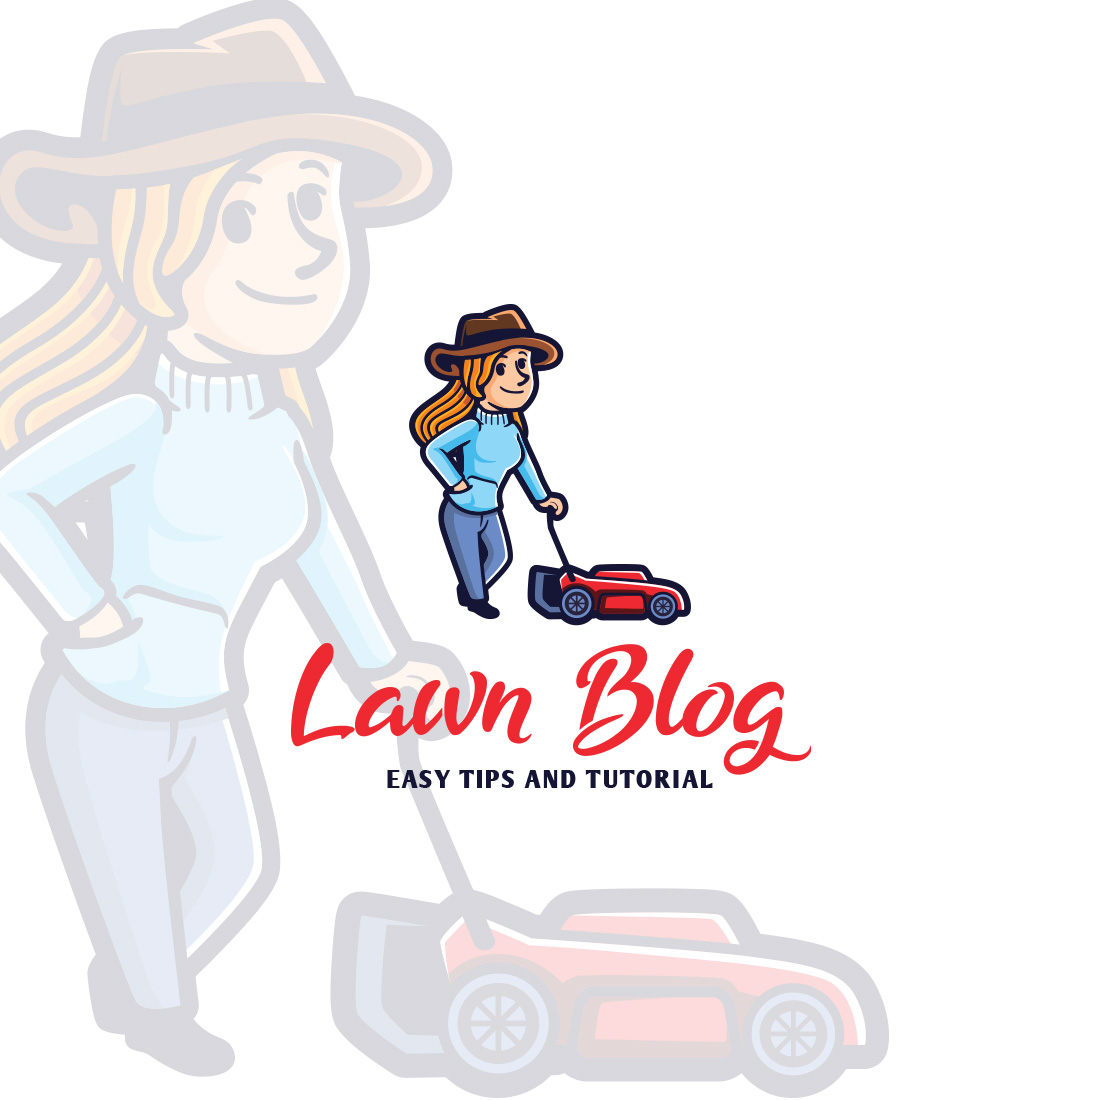 Lawn Blog Tutorial Logo Design cover image.